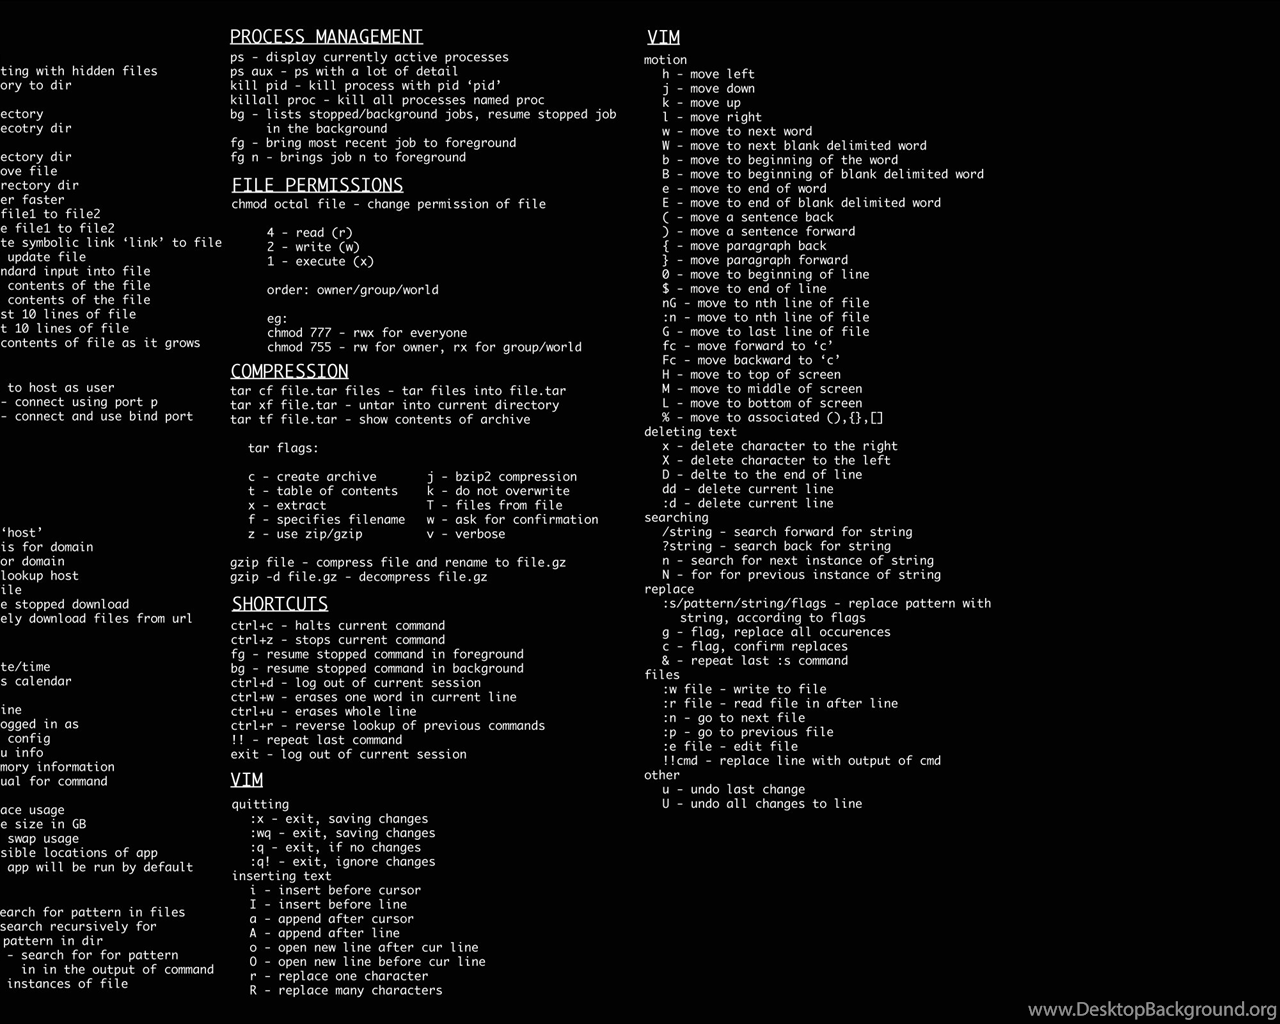 Linux Commands Wallpaper! [hi res], Reddit.com Desktop Background